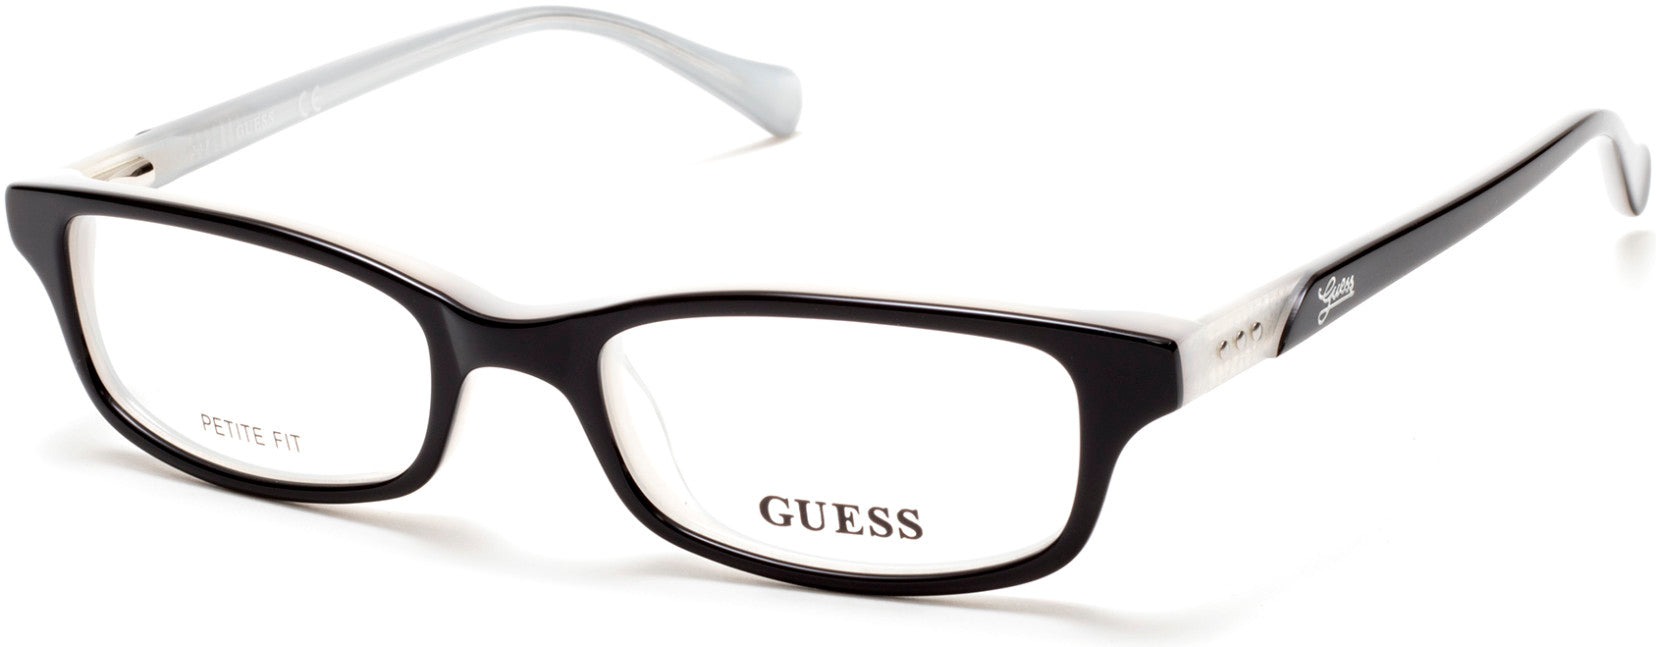 Guess GU2292 Eyeglasses 004-004 - Black/white